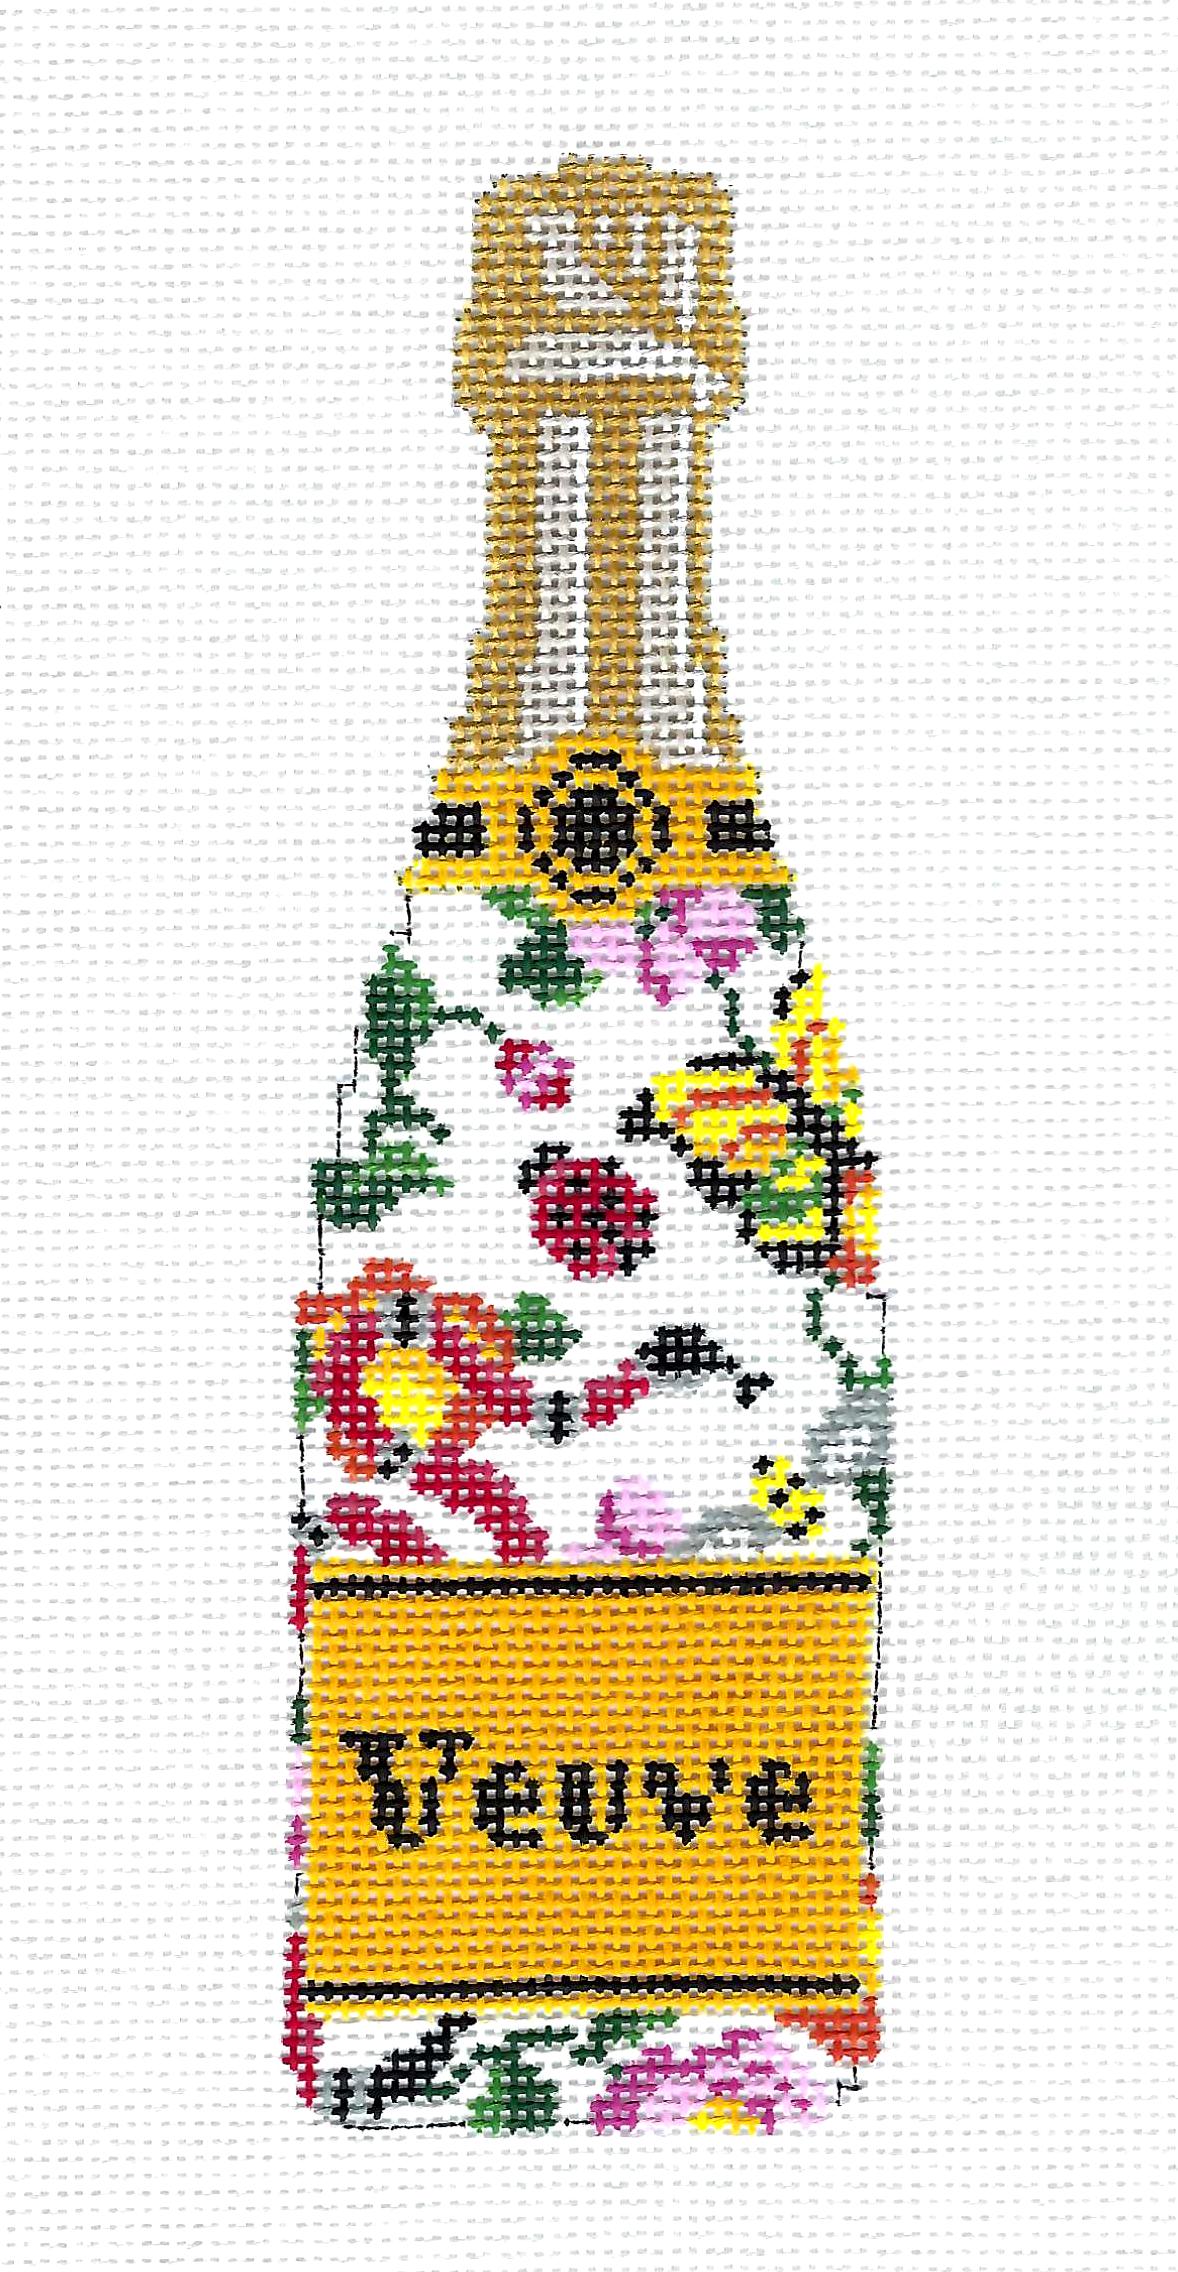 "Veuve" Champagne Bottle in Gucci Garden Floral Design 18 Mesh handpainted Needlepoint Canvas by C'ate La Vie